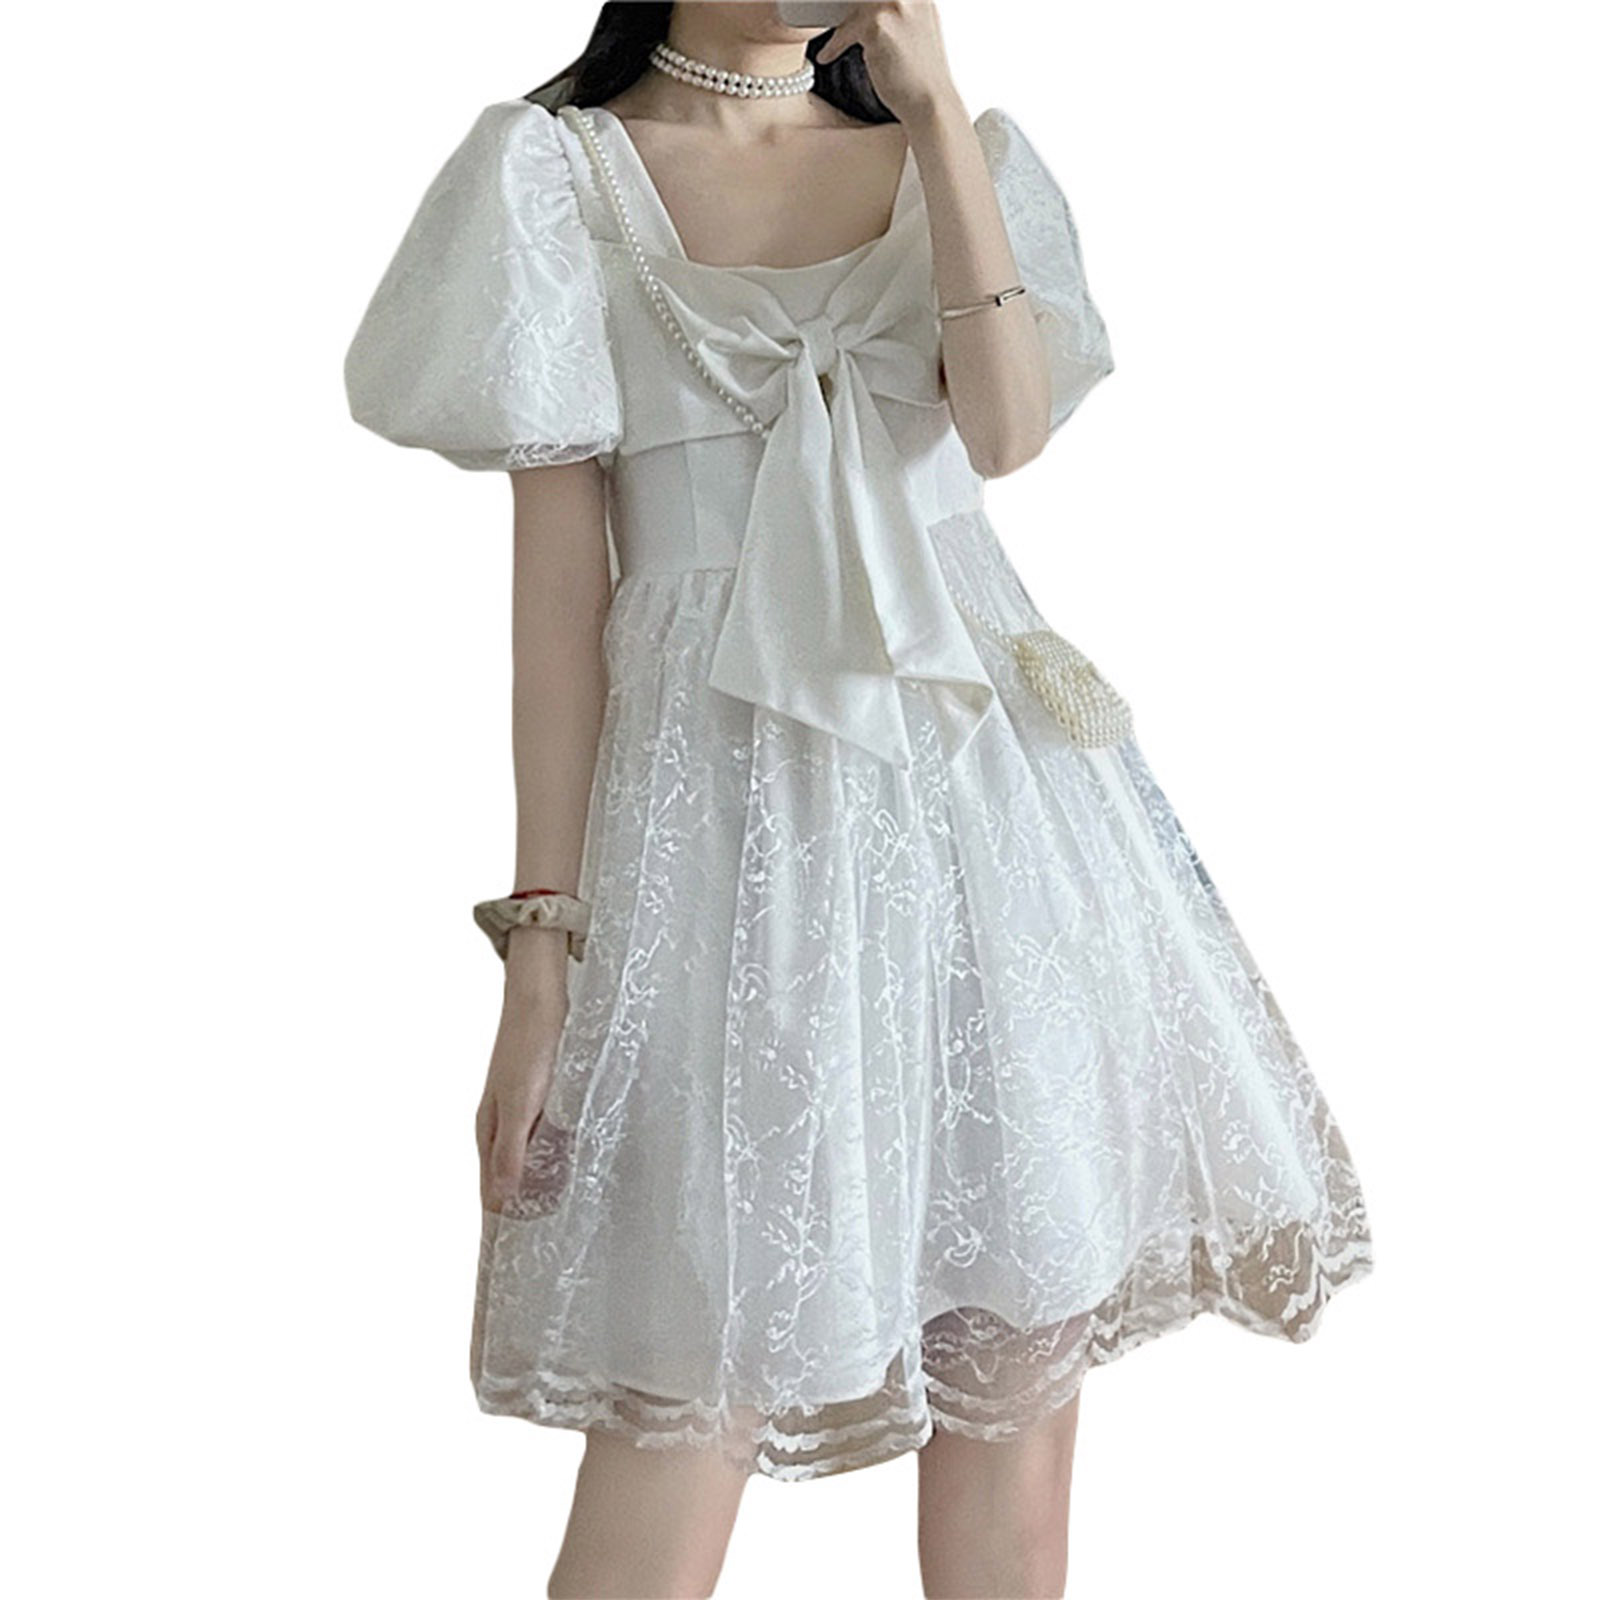 Summer Princess Dress For Women Sweet Lace Mesh Bowknot Short Dress Short Sleeves Solid Color A-line Skirt SJ336 white M